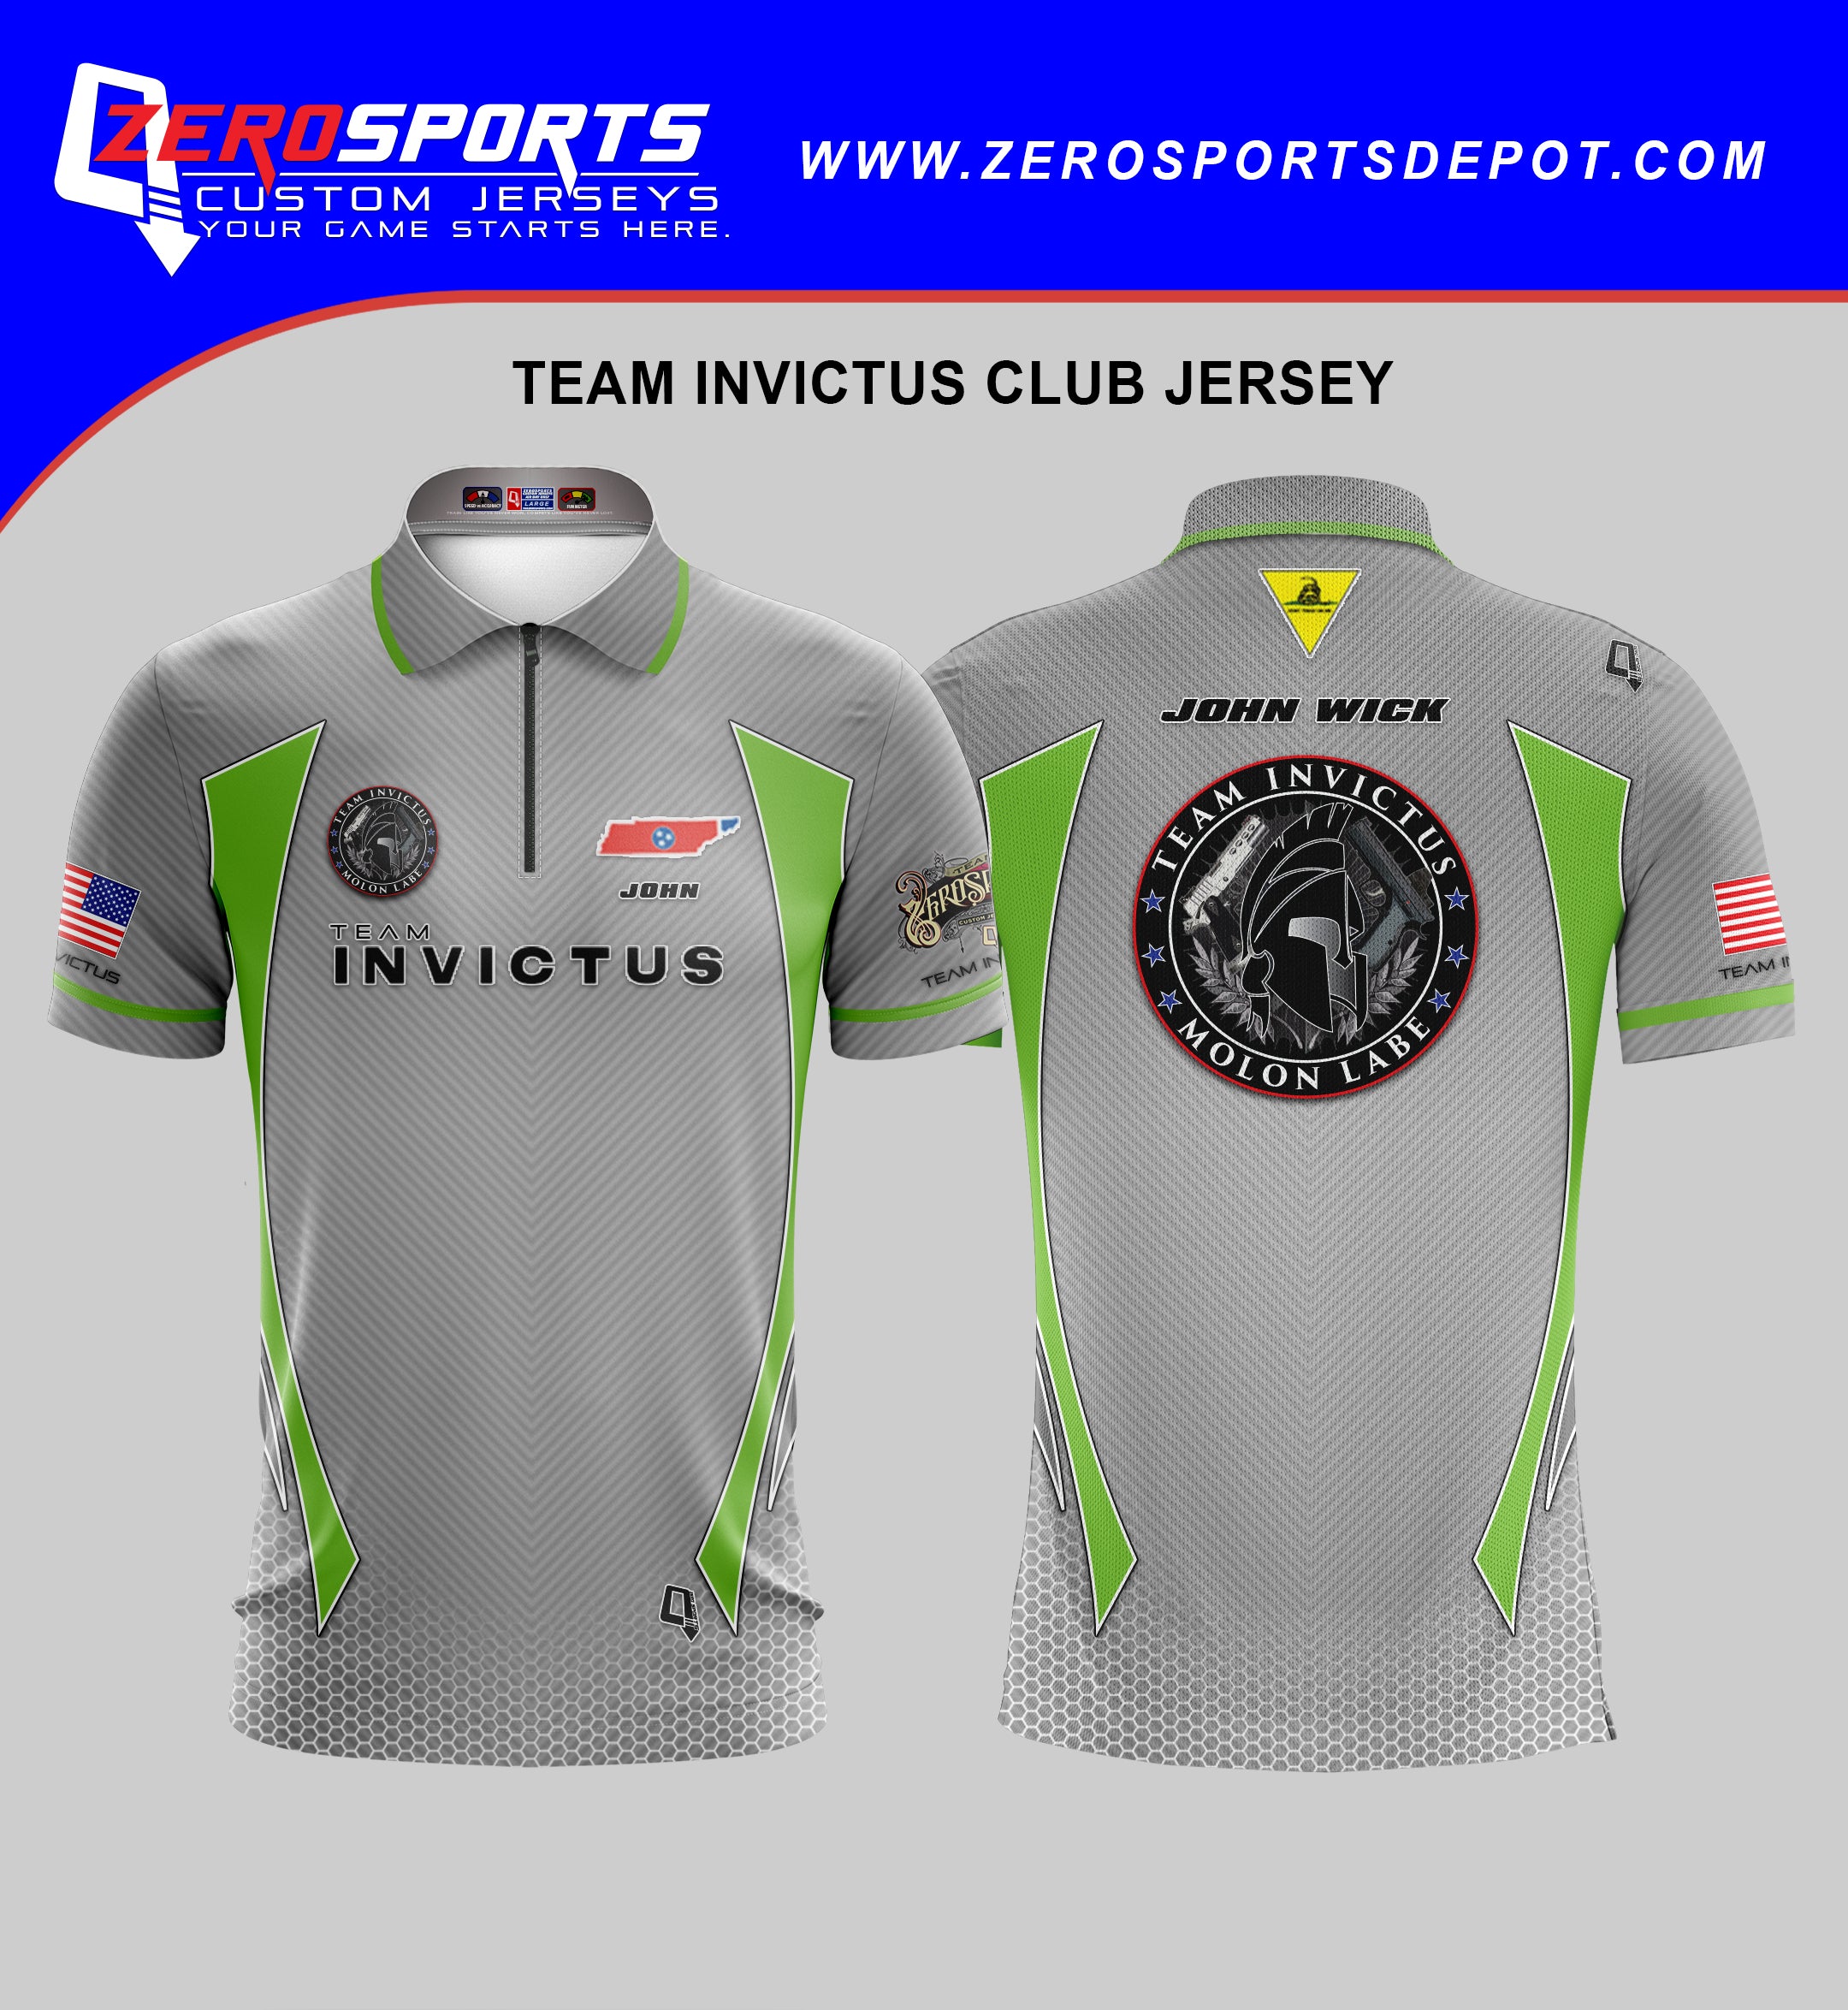 Team Invictus Club Jersey